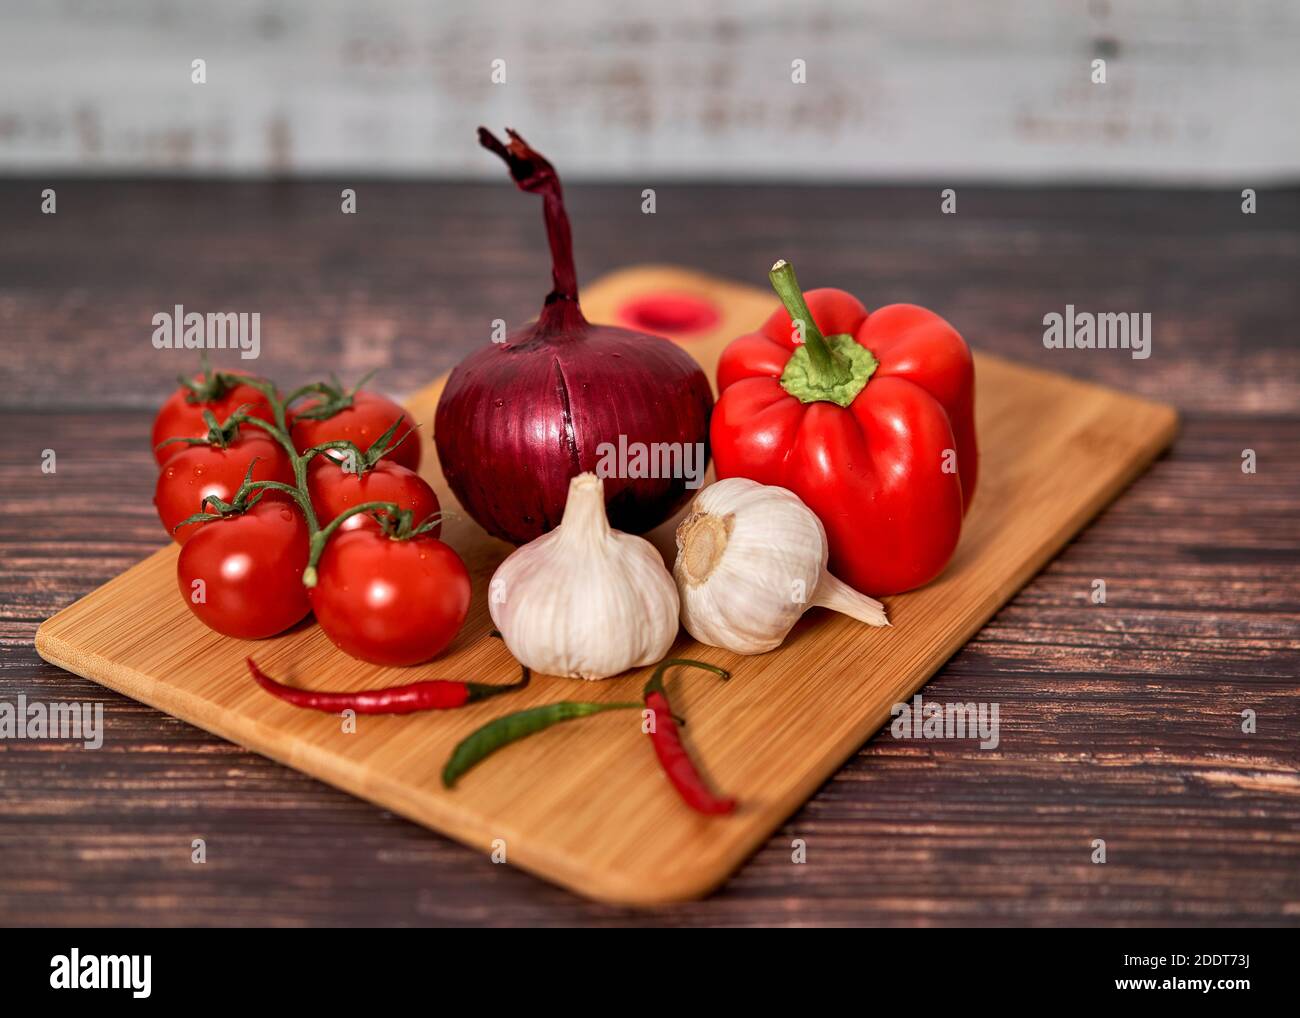 Verdure fresche su un tagliere Foto stock - Alamy